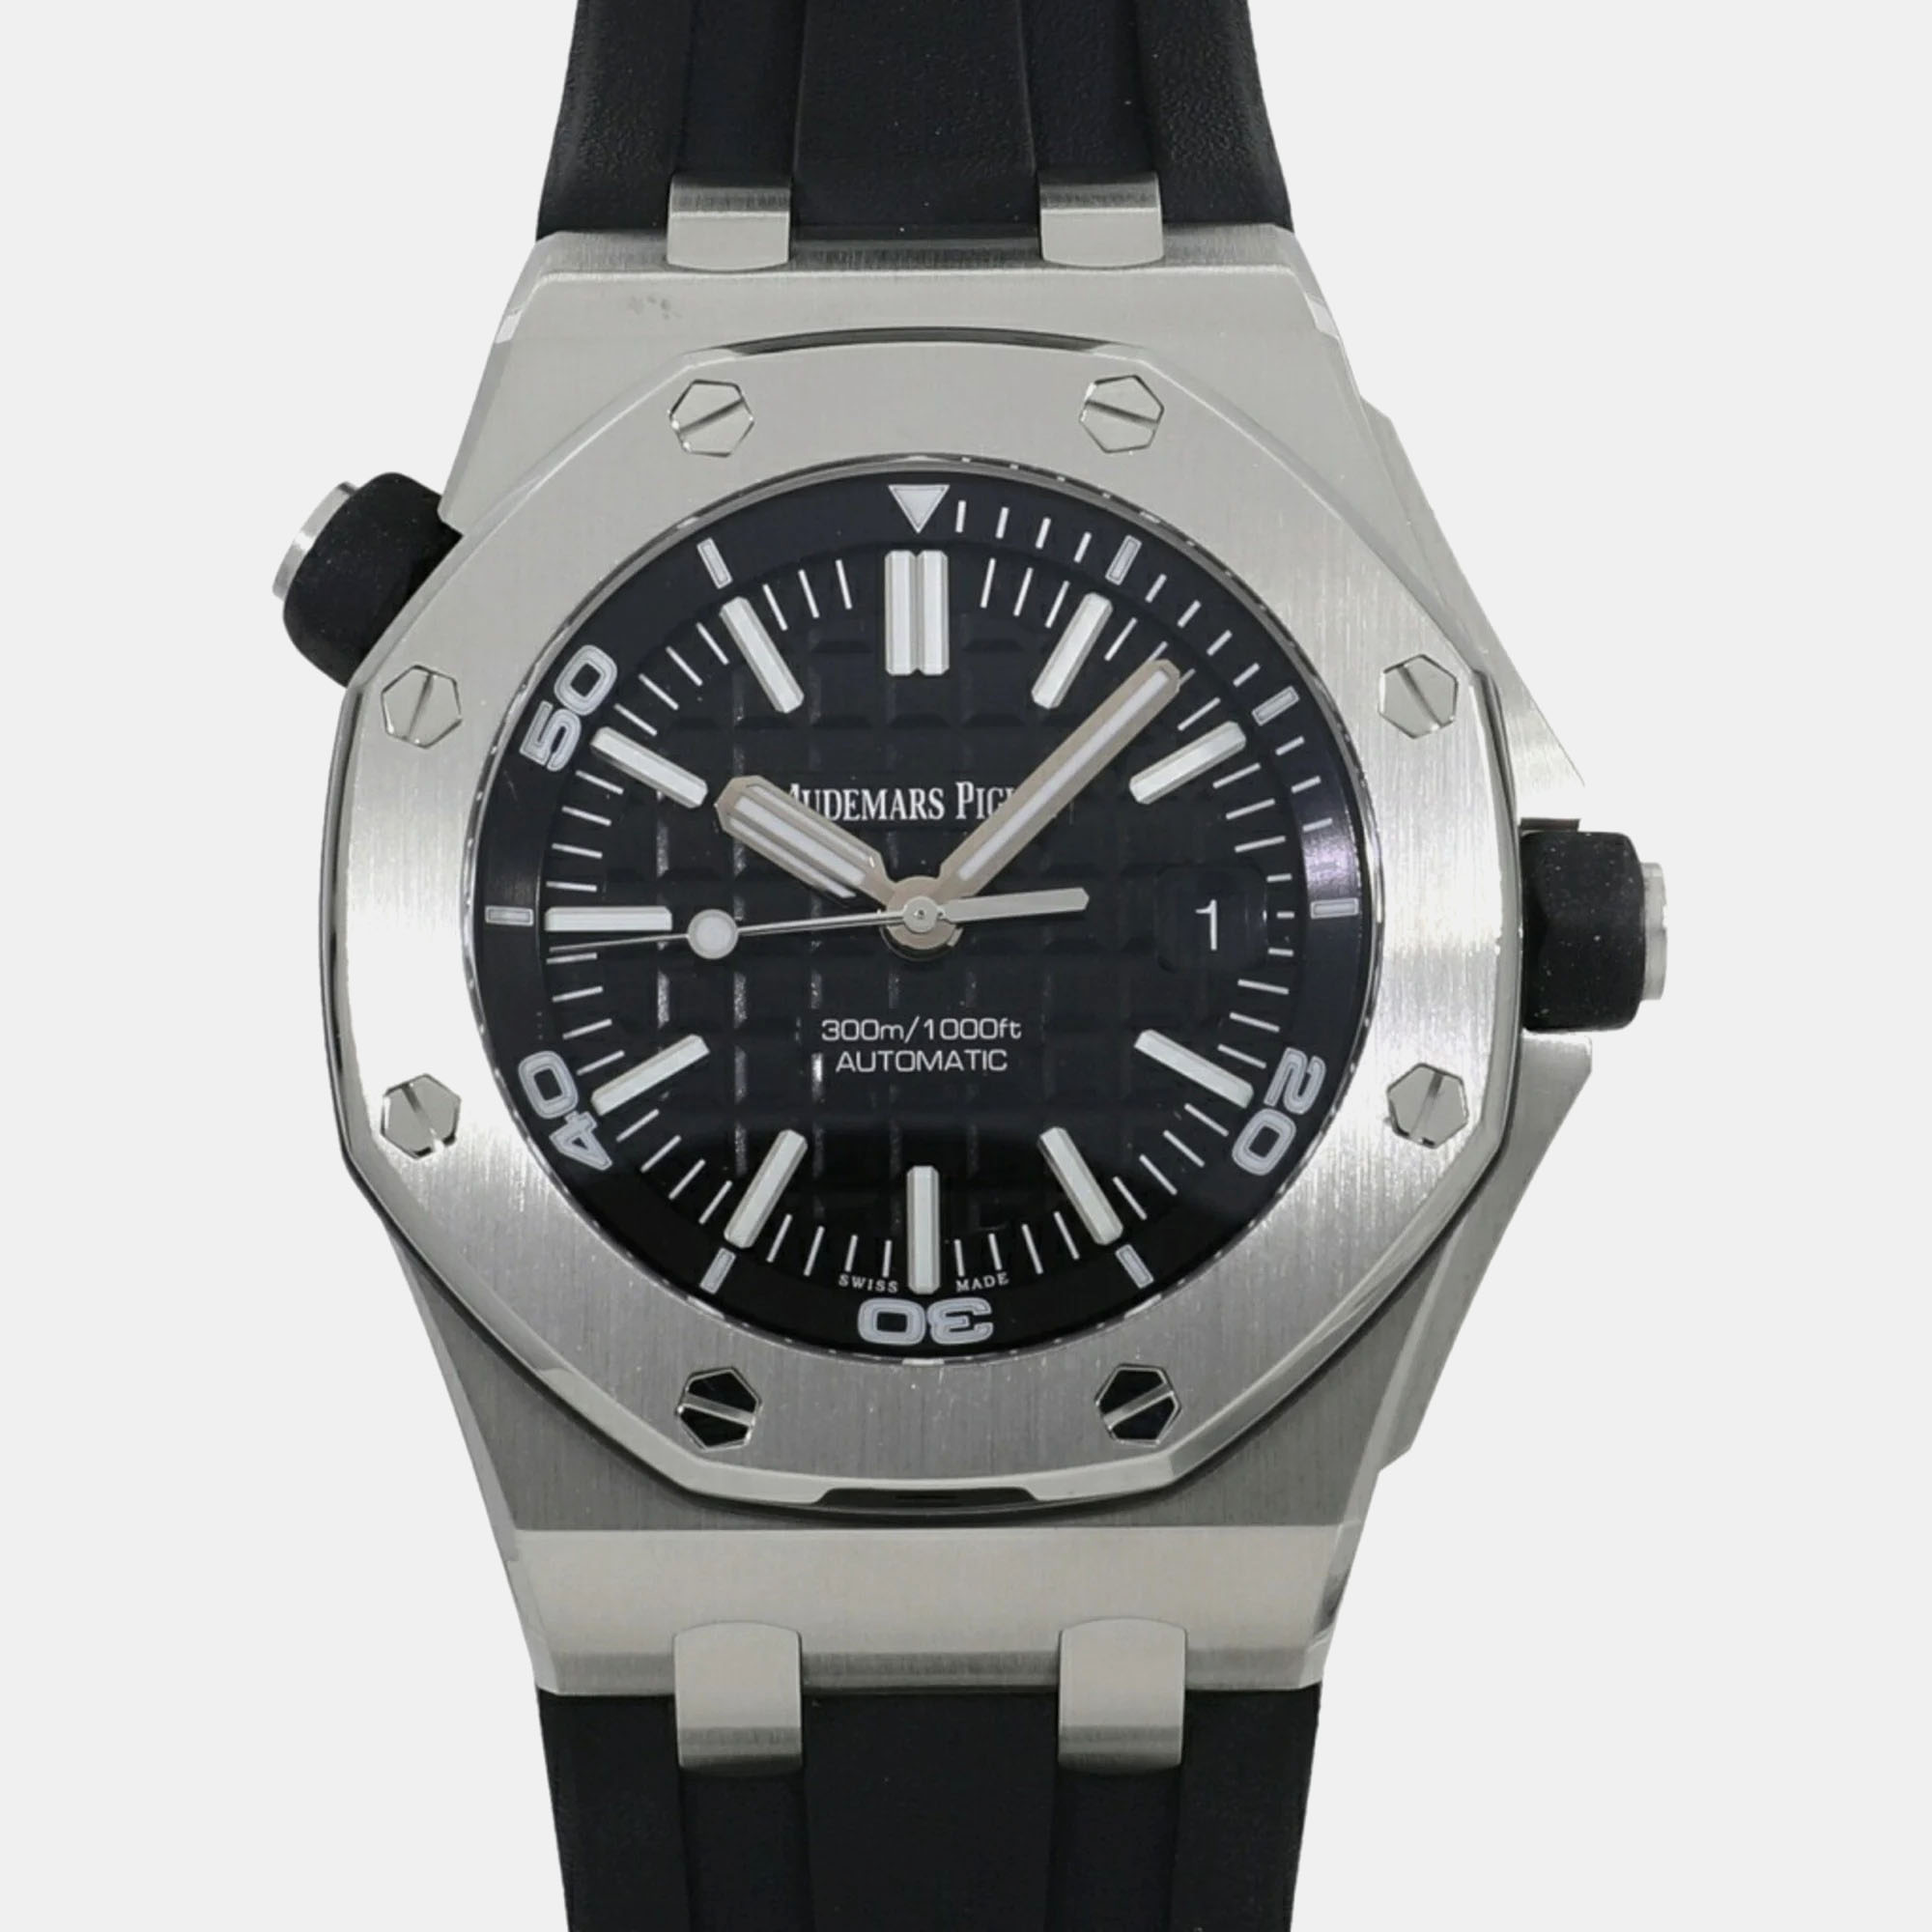 Audemars piguet black stainless steel royal oak 15710st.oo.a002ca.01 automatic men's wristwatch 42 mm